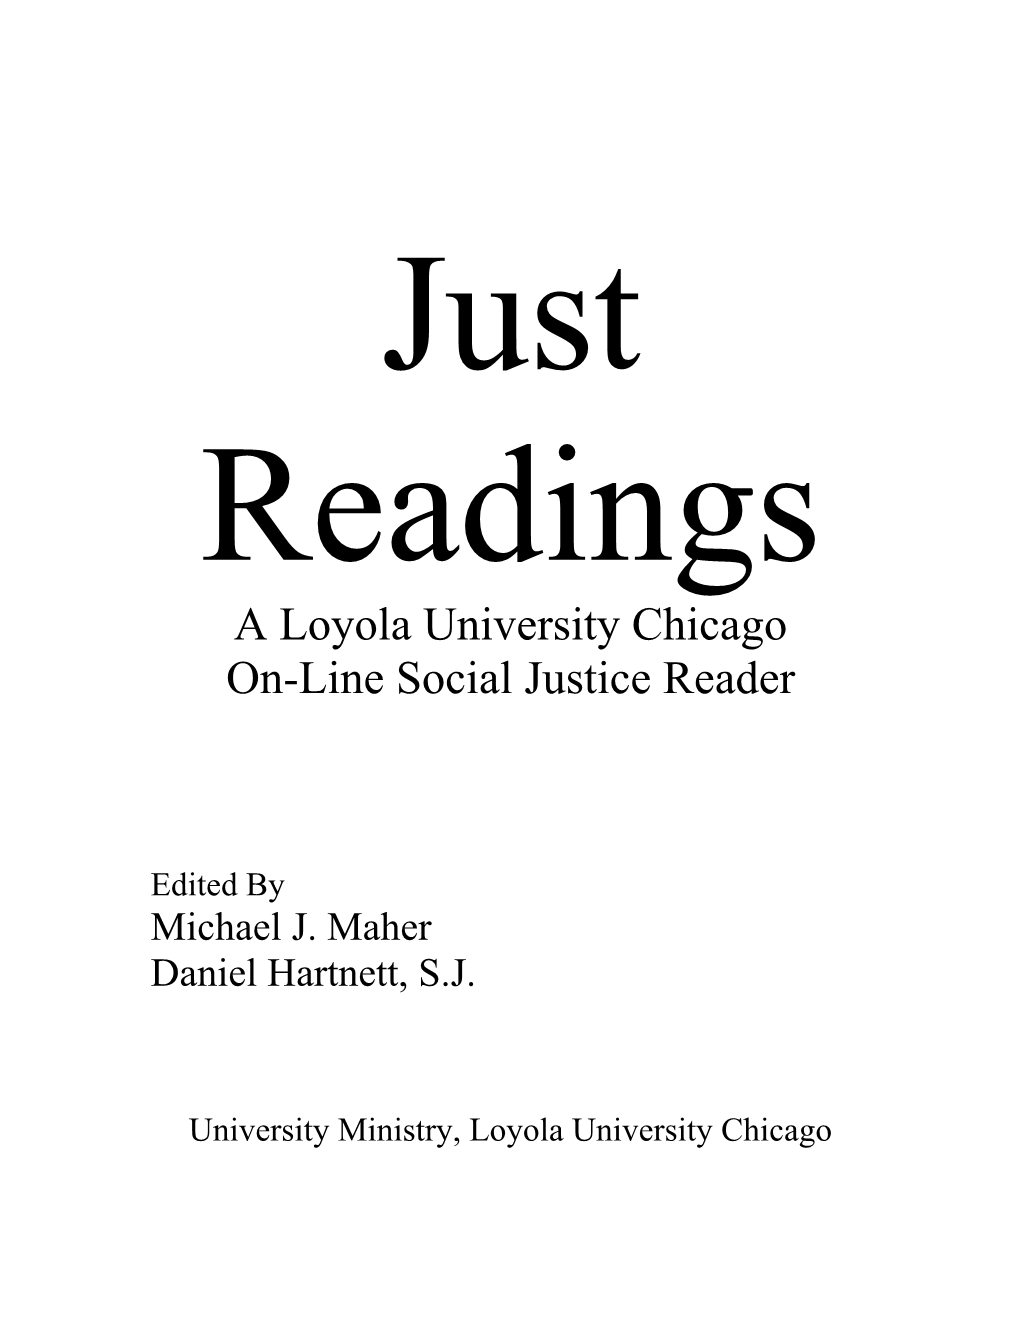 A Loyola University Chicago On-Line Social Justice Reader